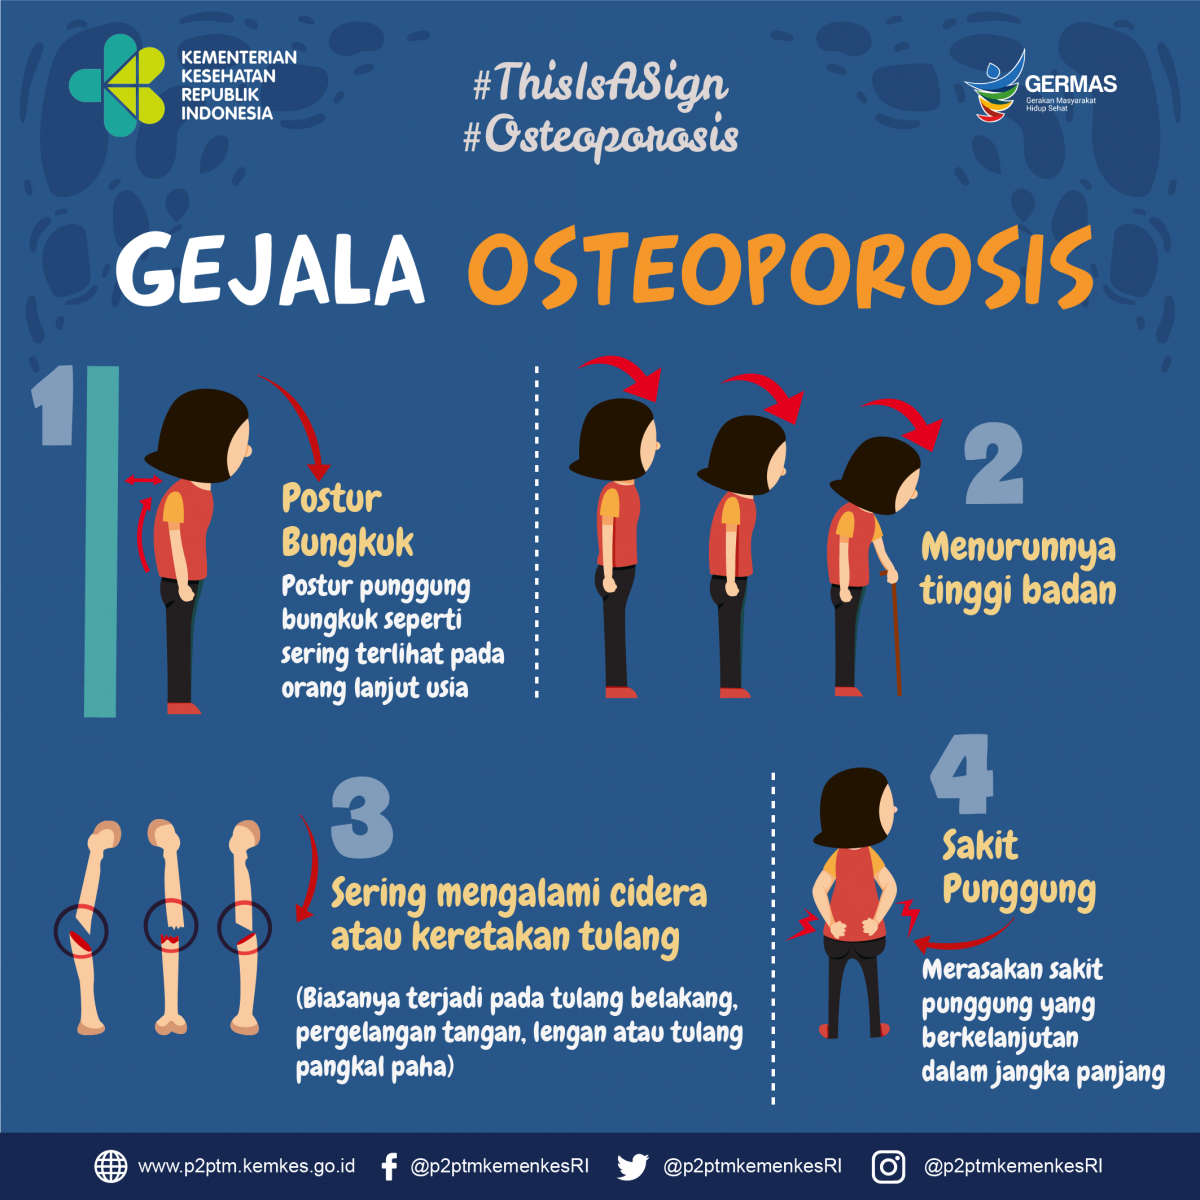 Apa saja gejala Osteoporosis?